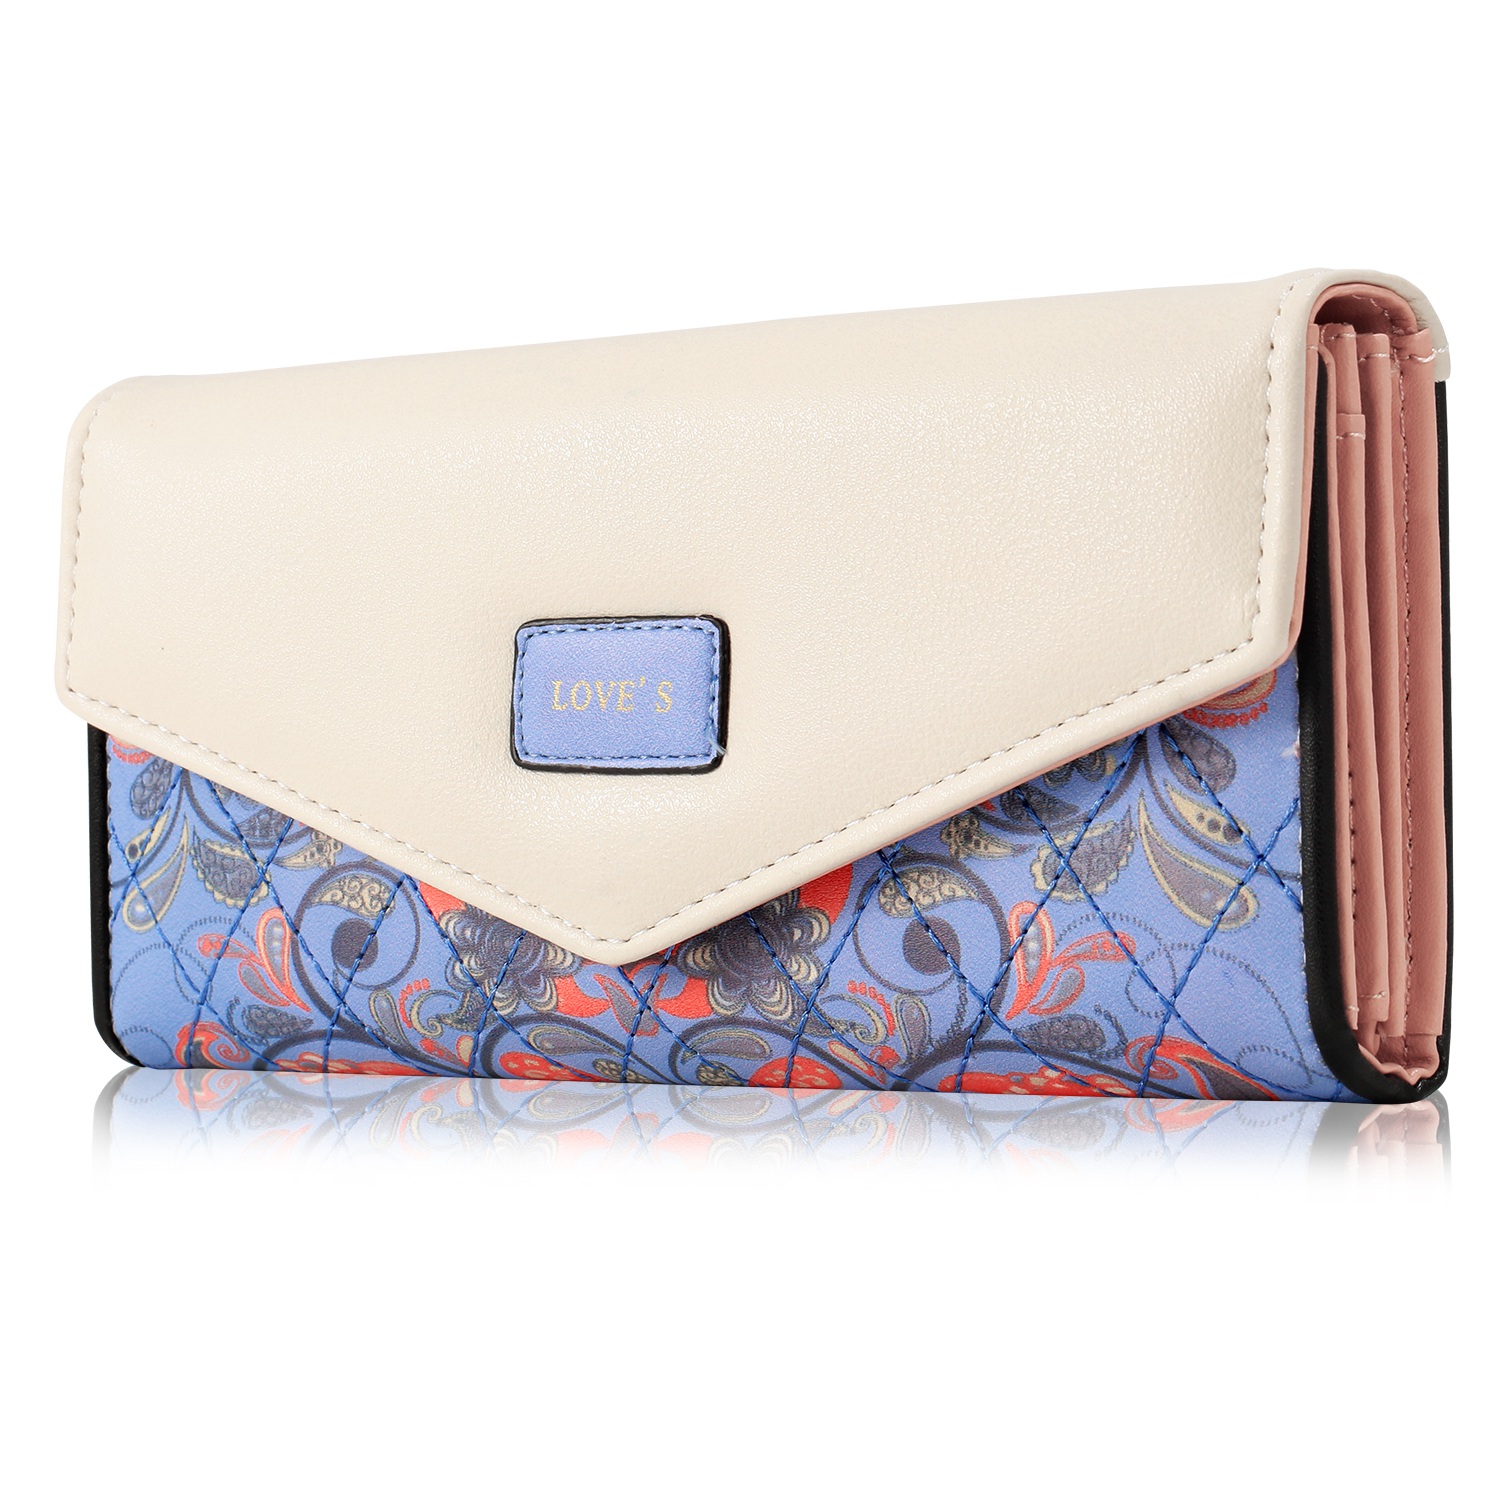 Crochet zip wallet Handmade blue and white purse Big women/'s wallet Cards holder